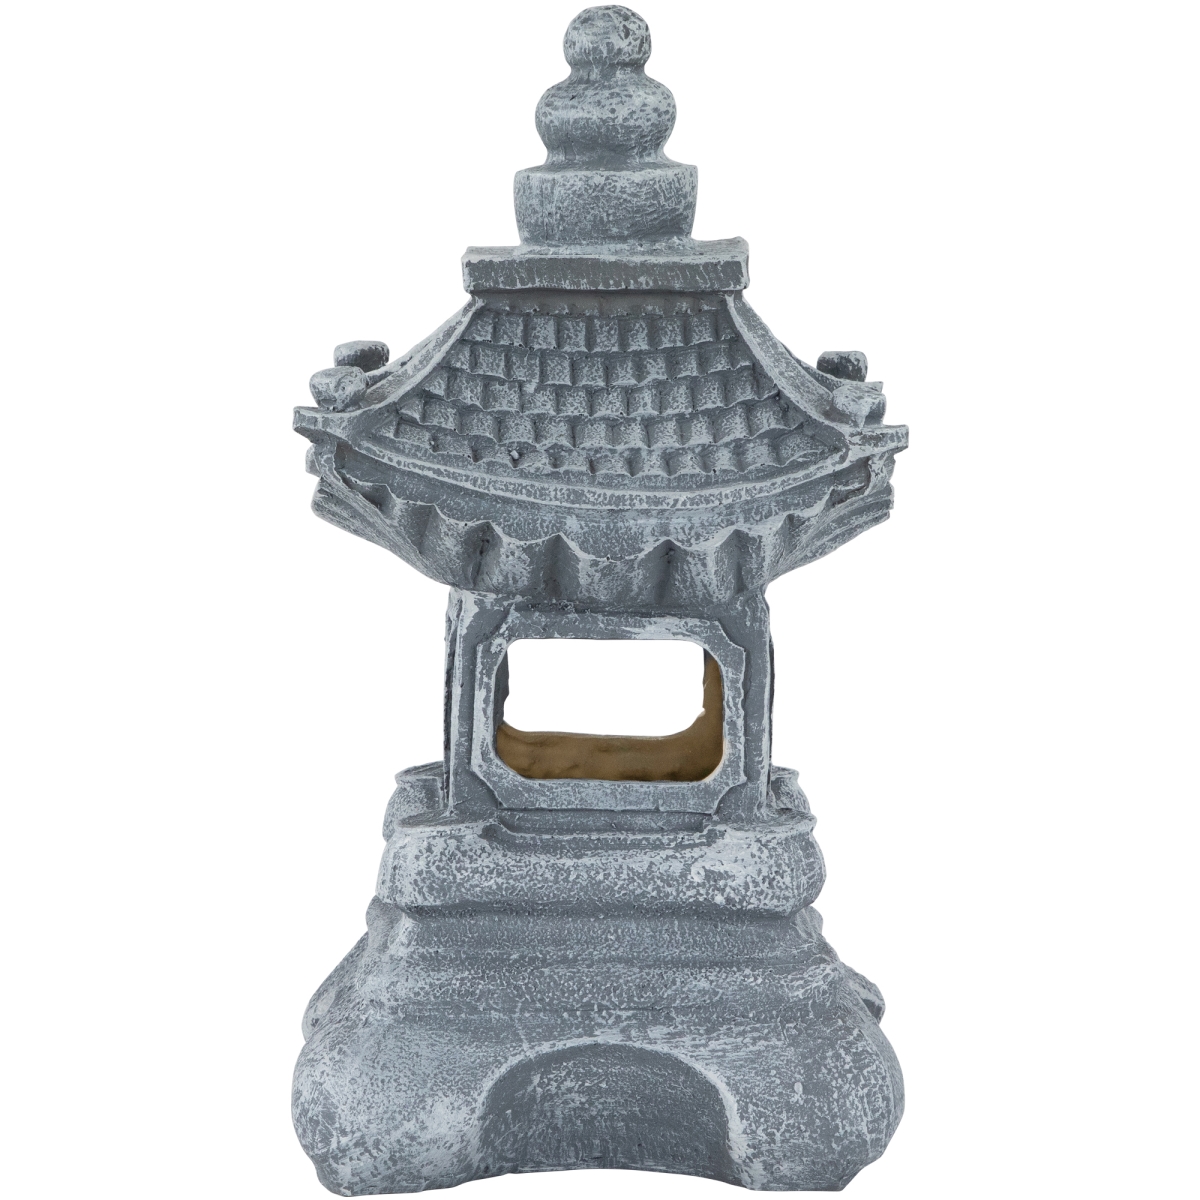 Northlight 35665401 13 in. Solar Powered LED Lighted Pagoda Outdoor Garden Statue